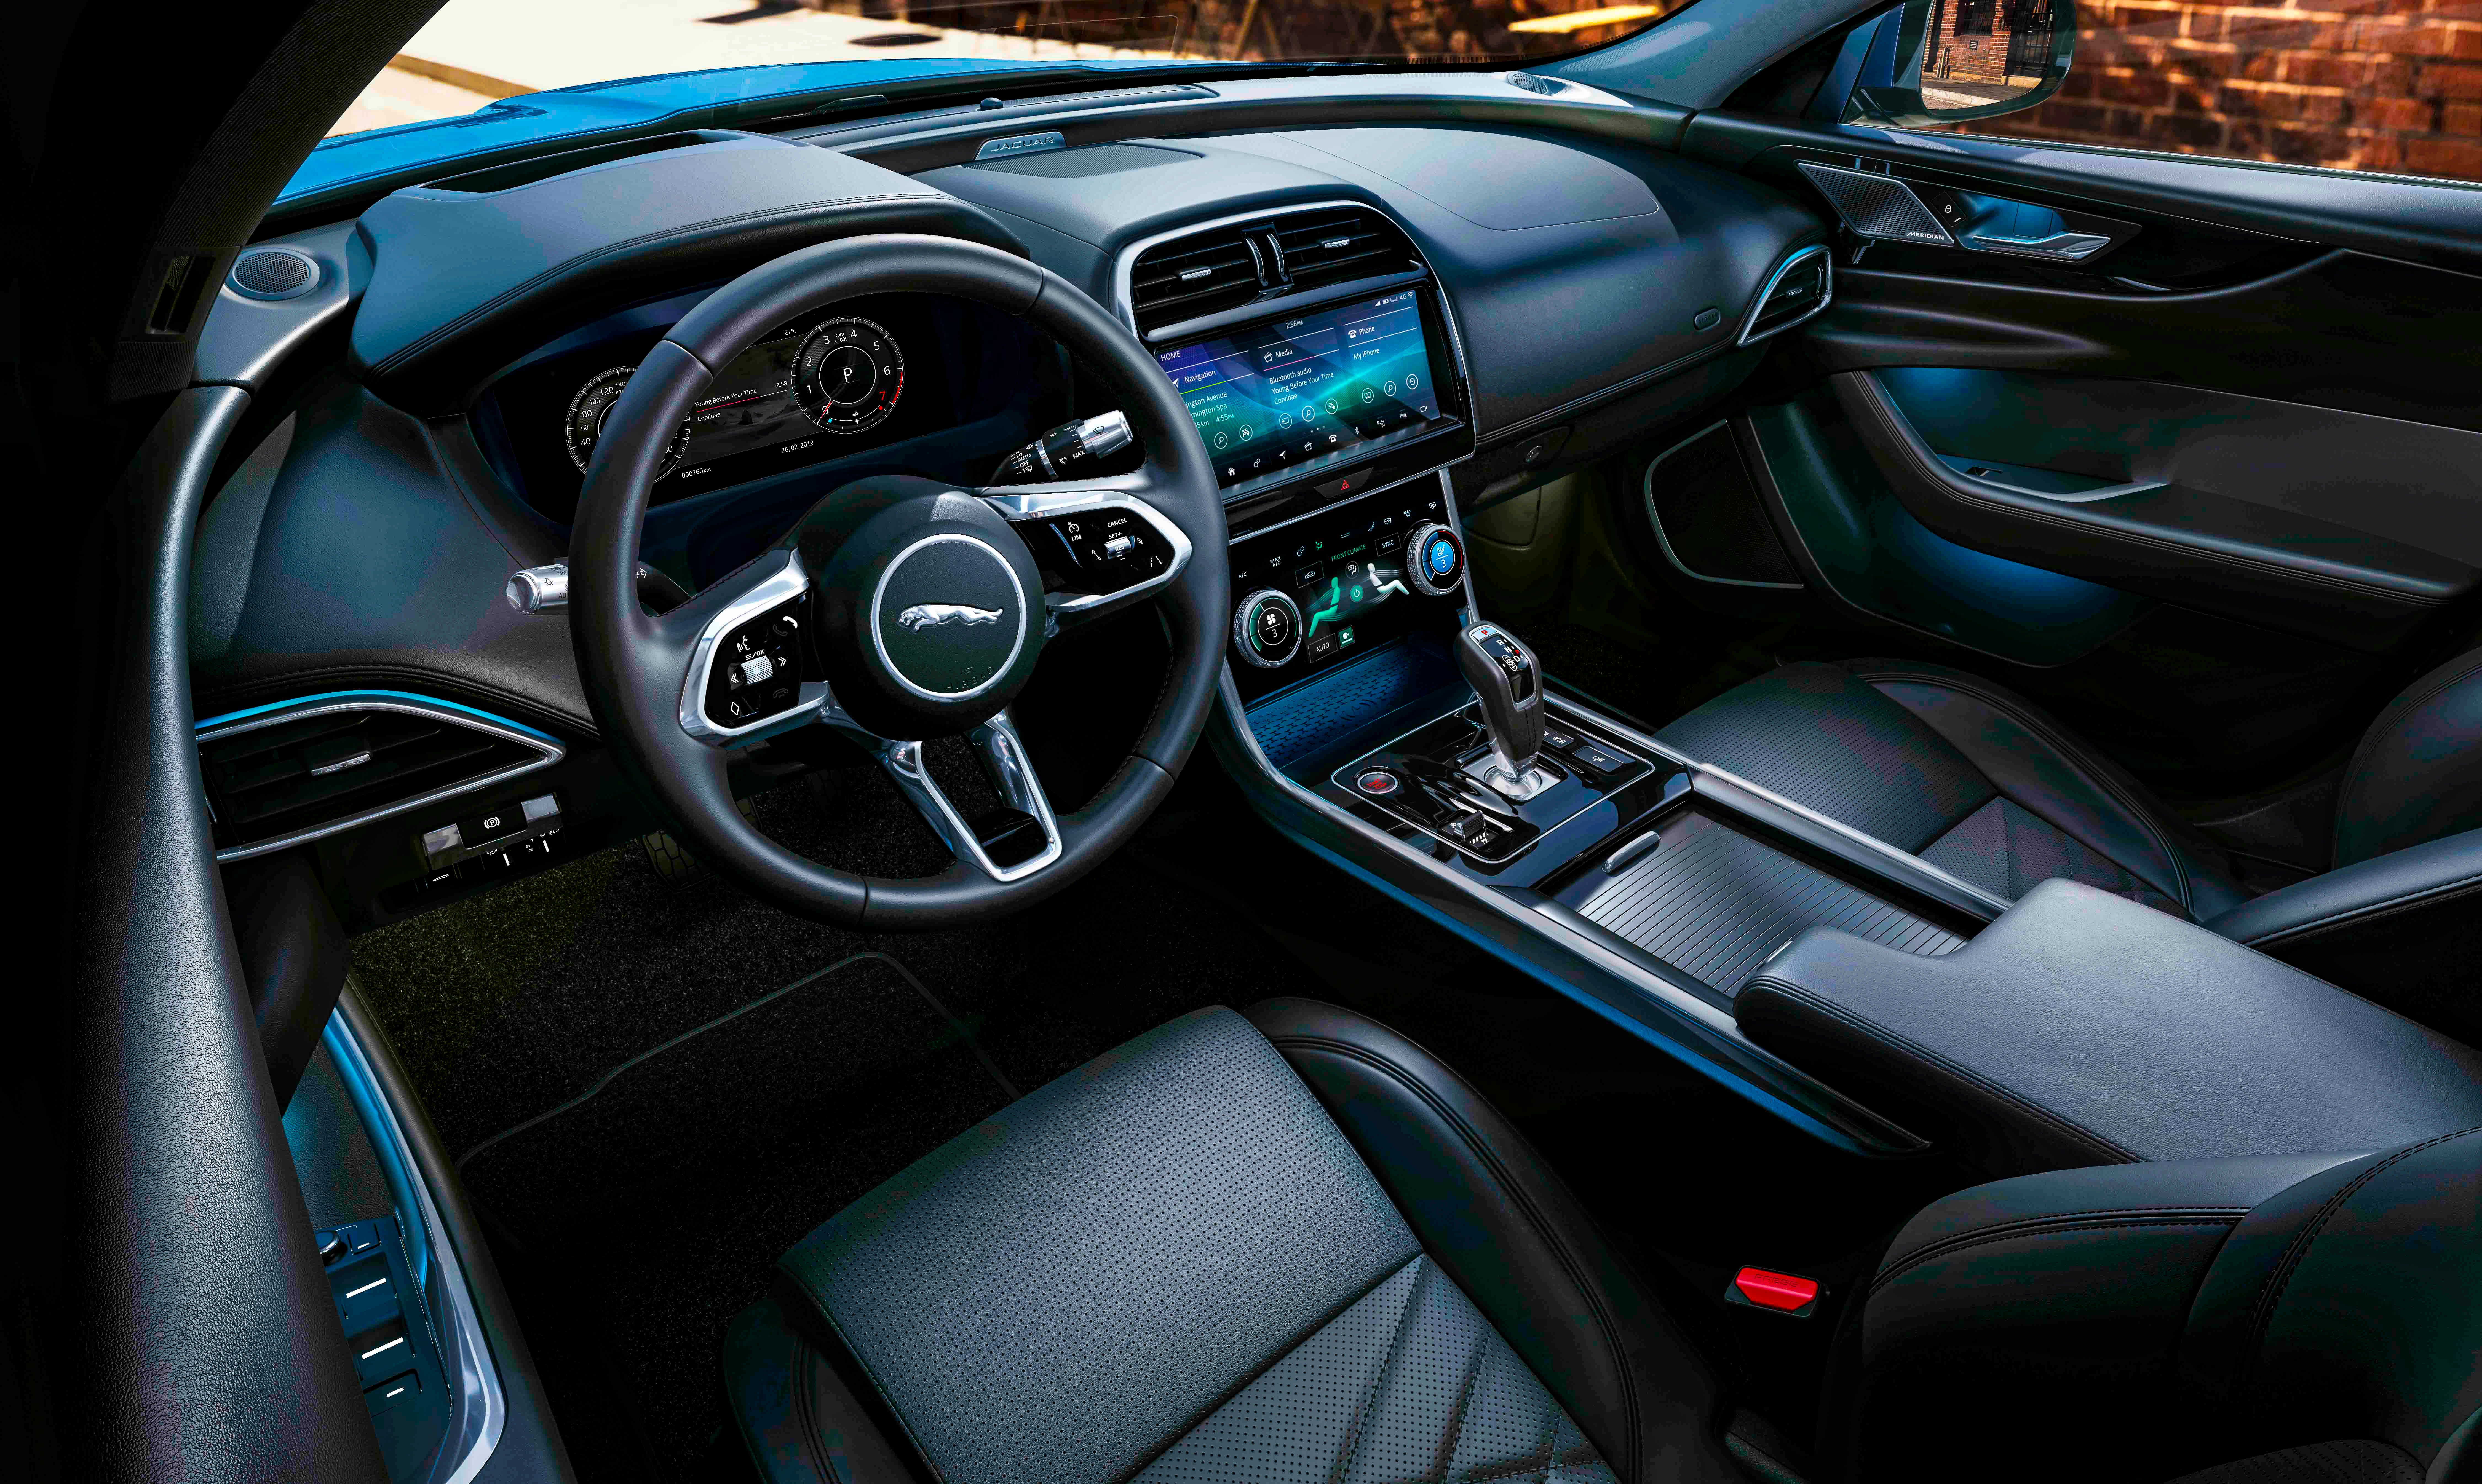 2020 Jaguar XE